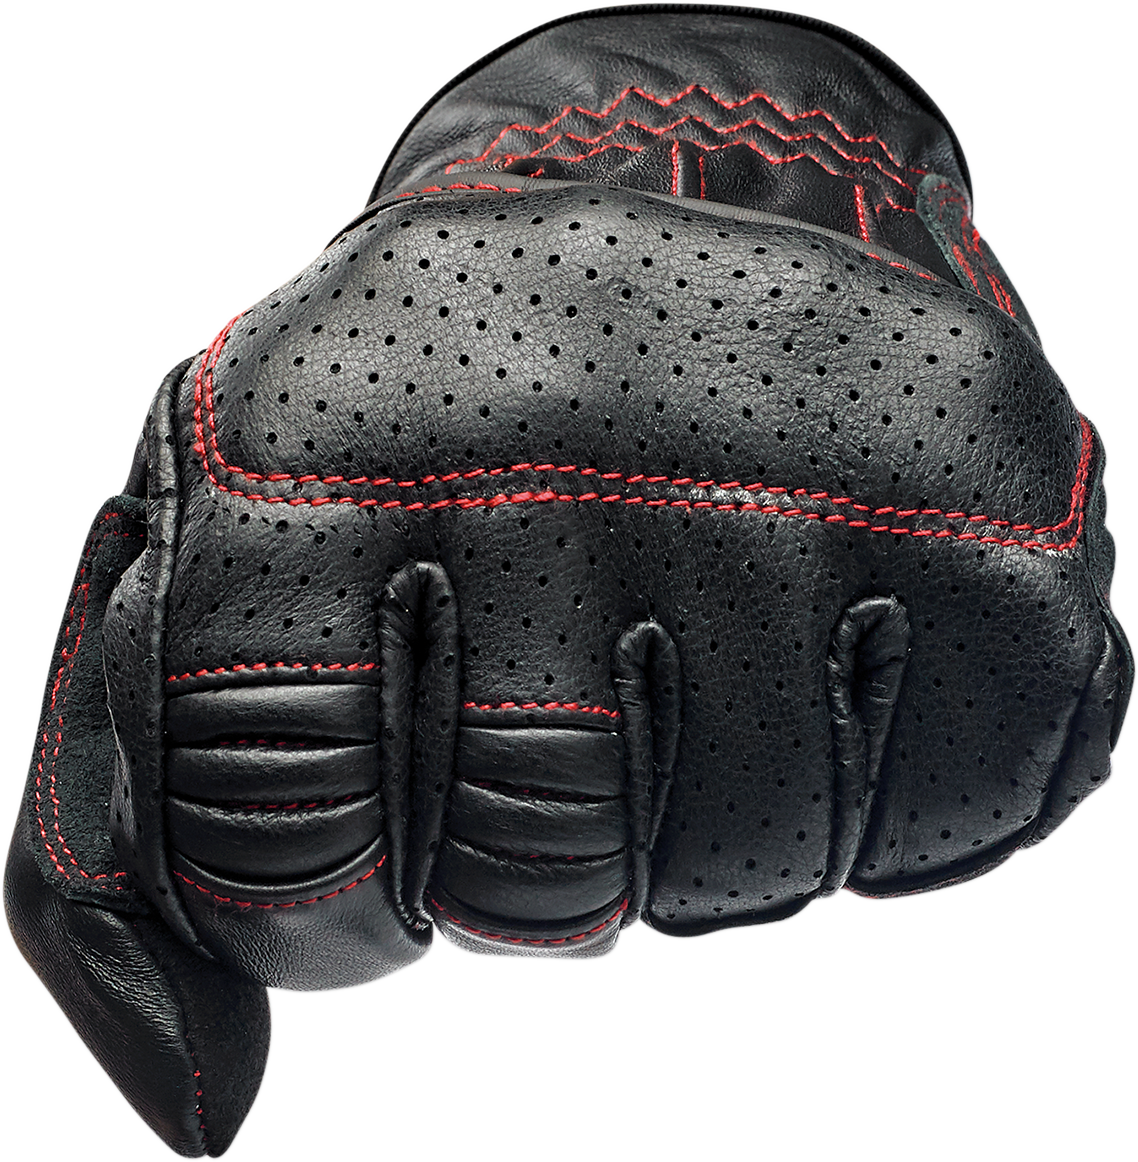 BILTWELL Borrego Gloves - Redline - XL 1506-0108-305